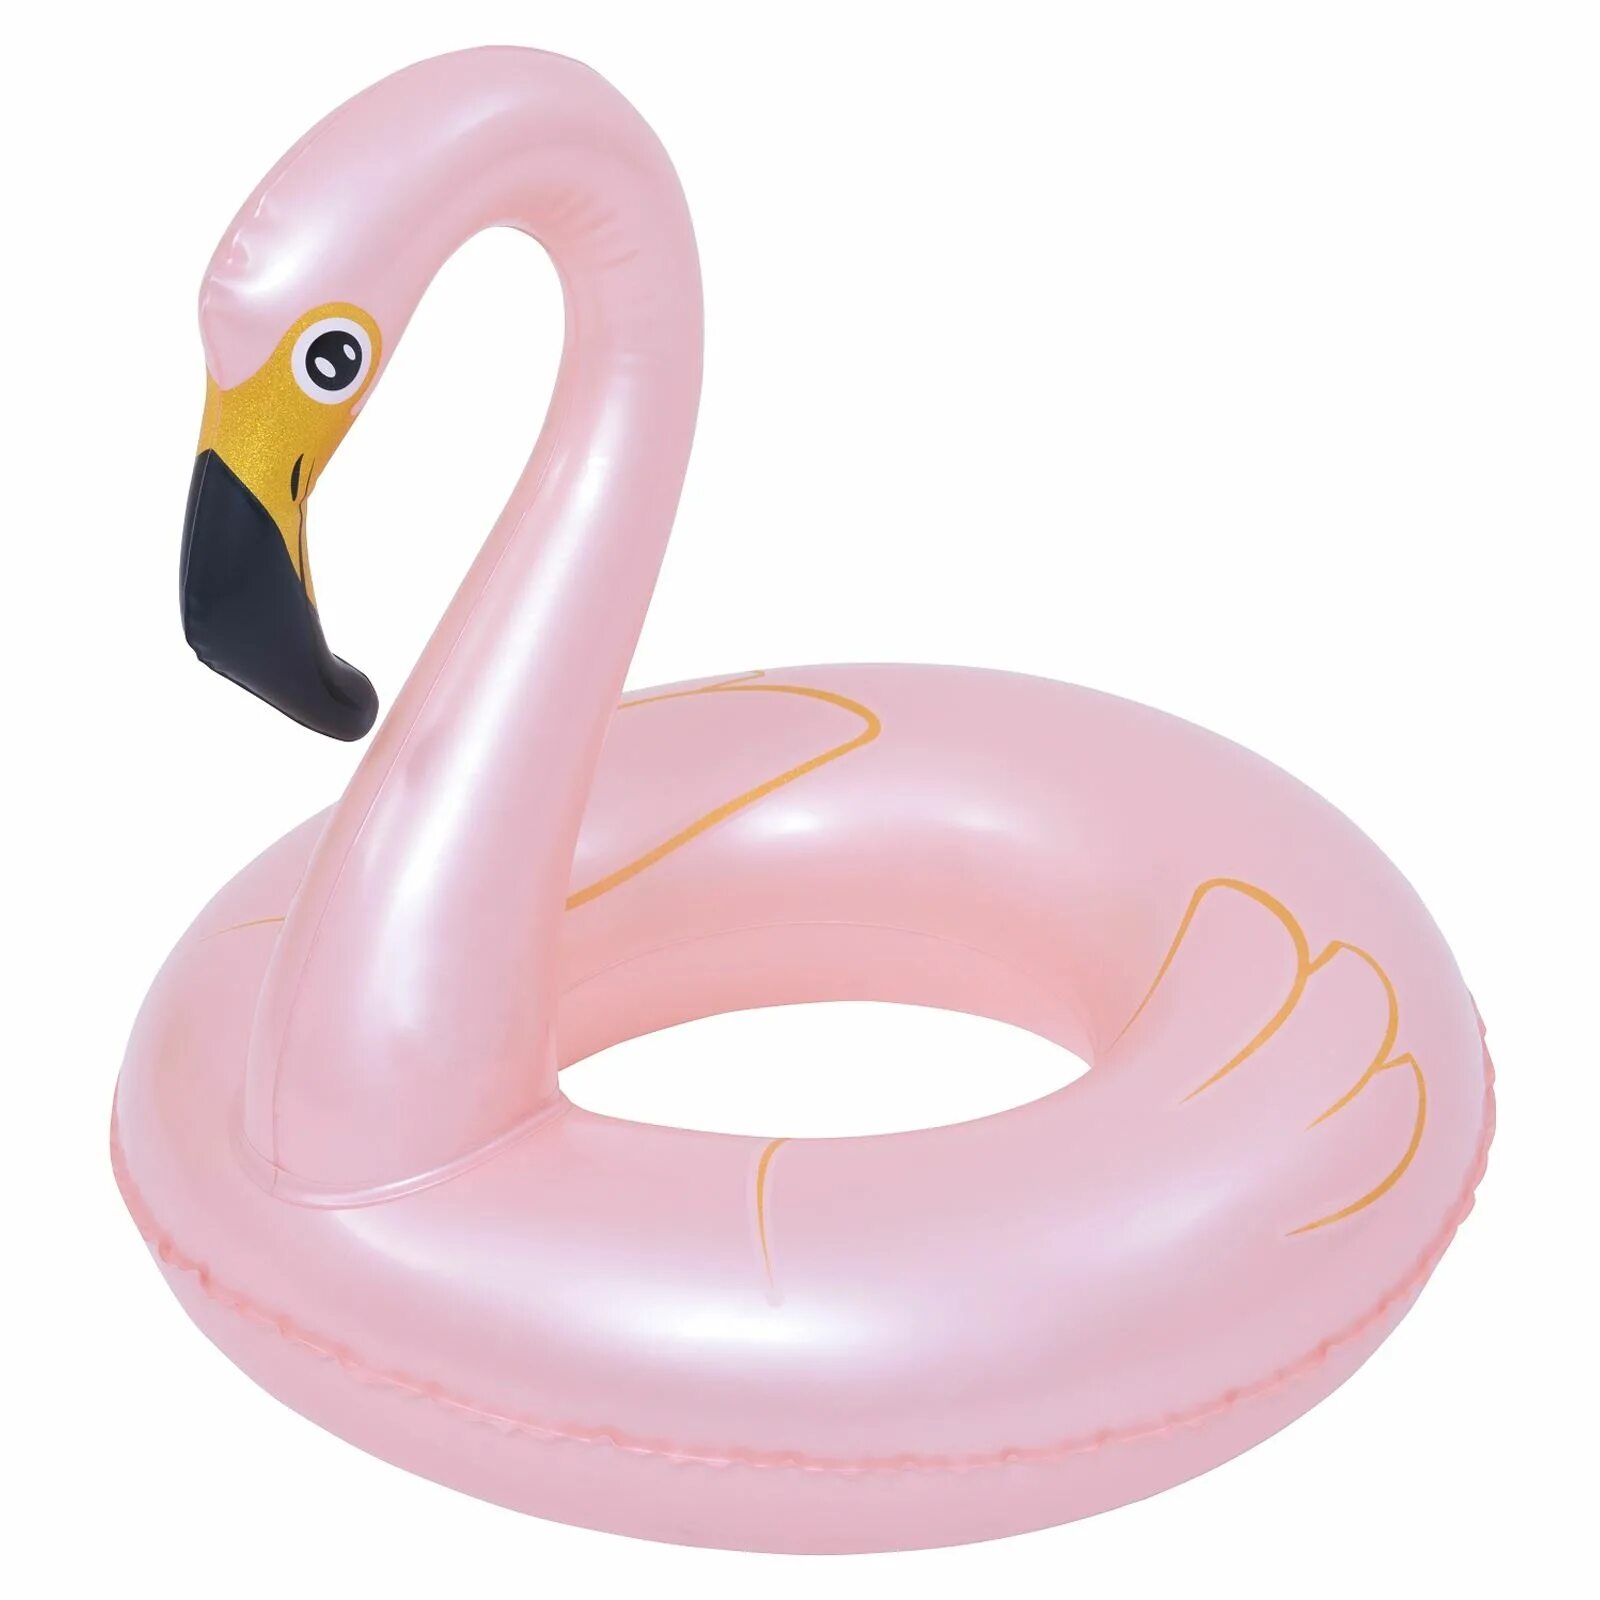 Надувной круг Фламинго. Надувной круг Фламинго 120 см. Flamingo надувной круг Inflatable swimming. Круг надувной Фламинго 55см 141-128р. Фламинго для плавания